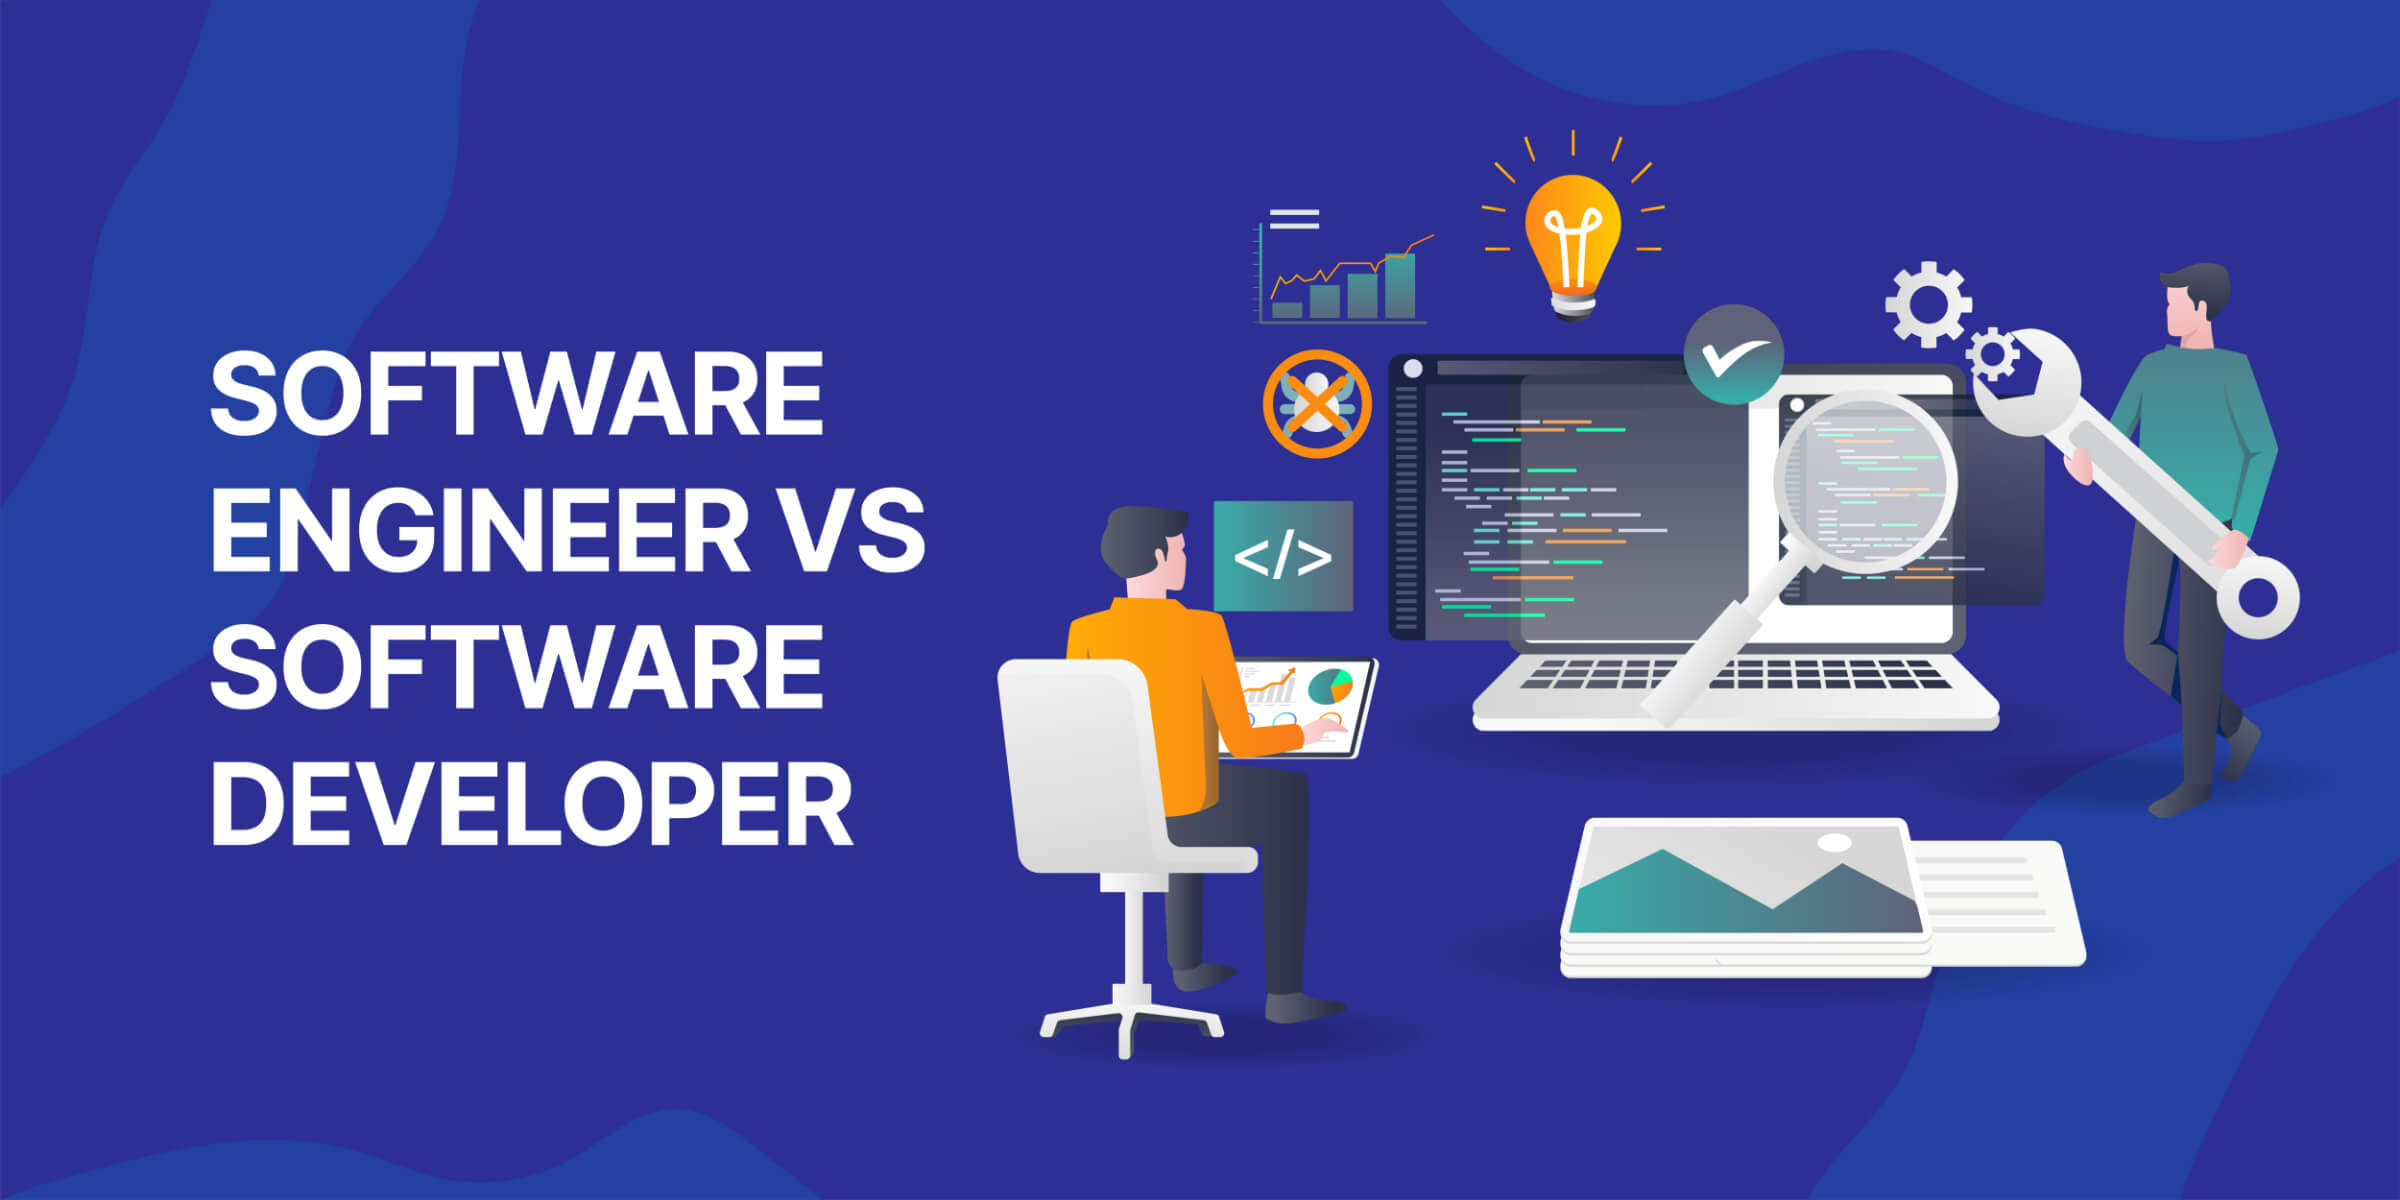 Software Engineer vs Developer